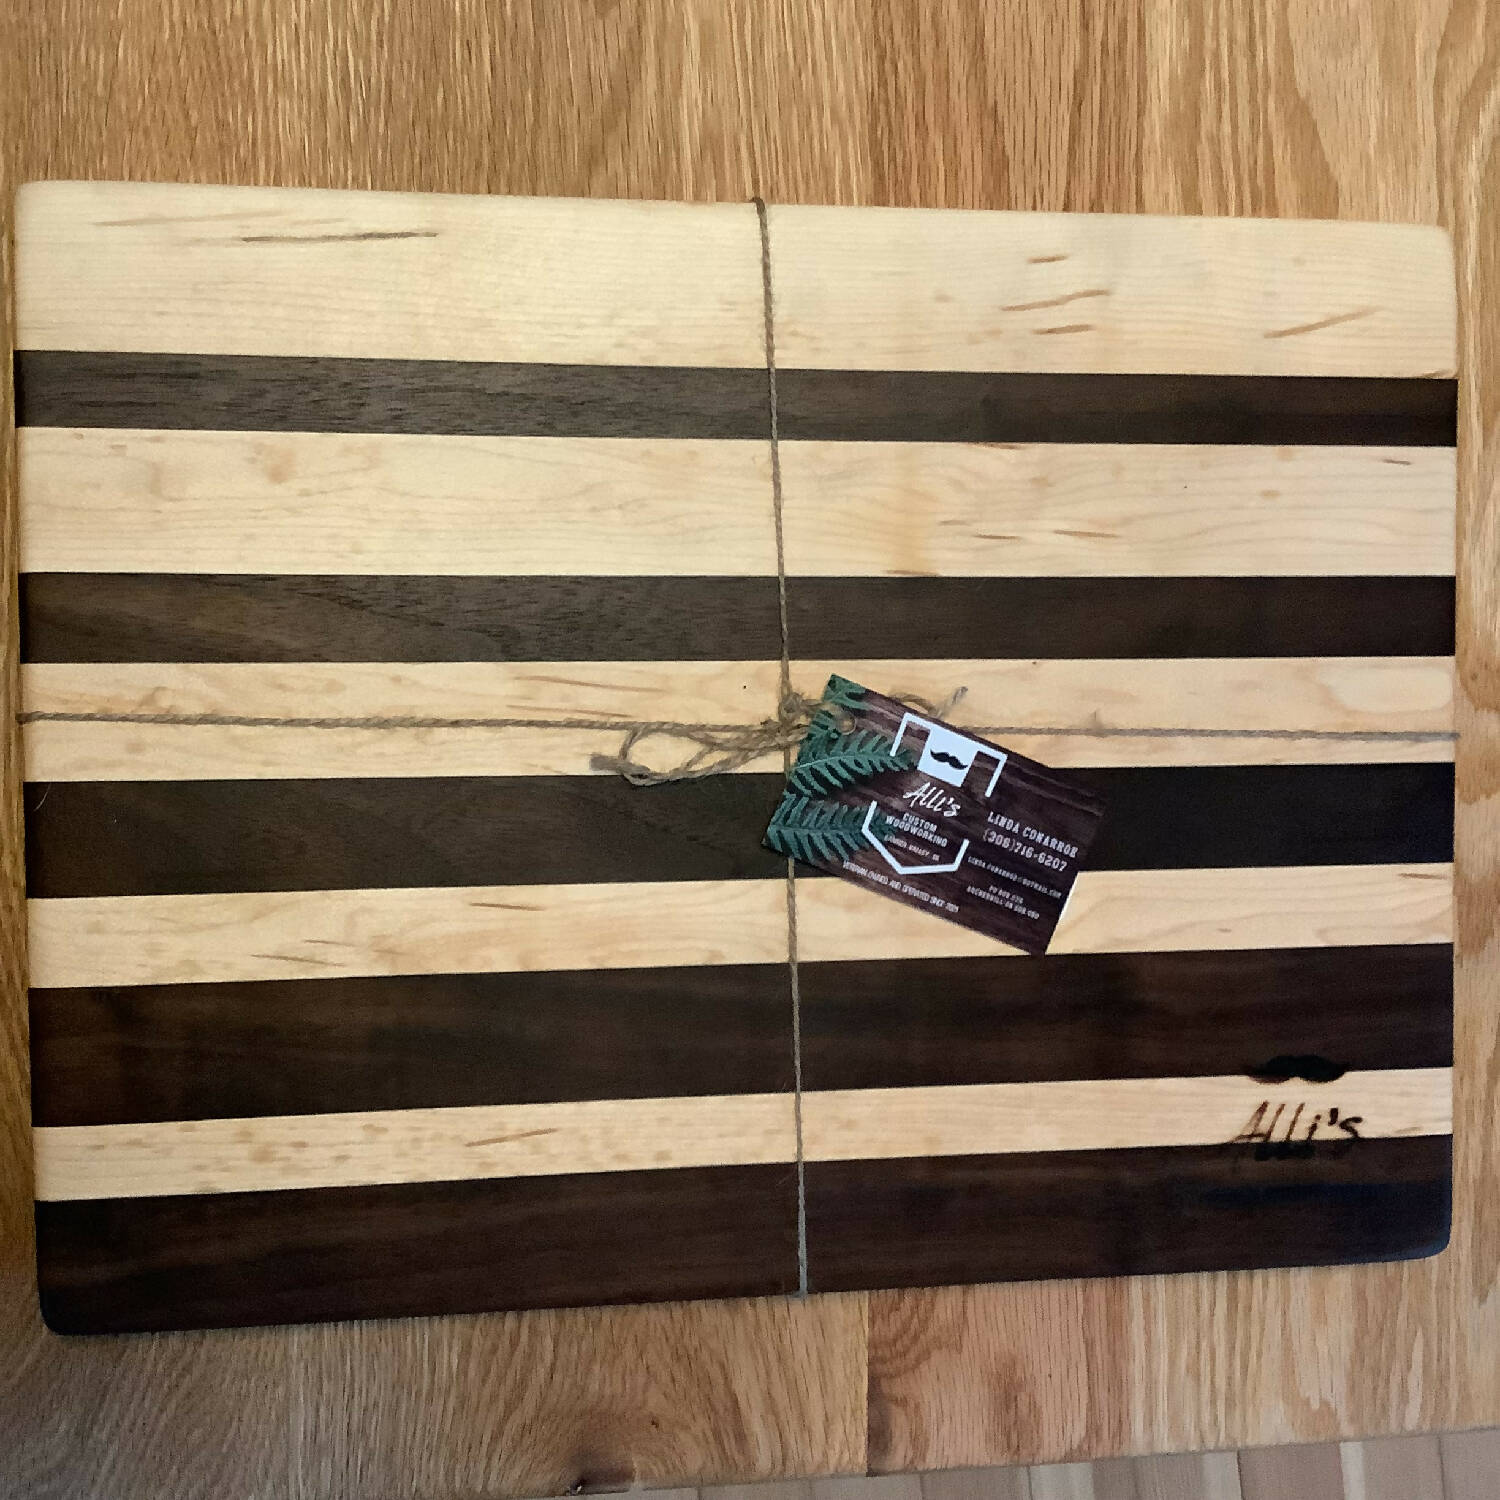 16” x 12” maple and walnut cutting board in gradient pattern